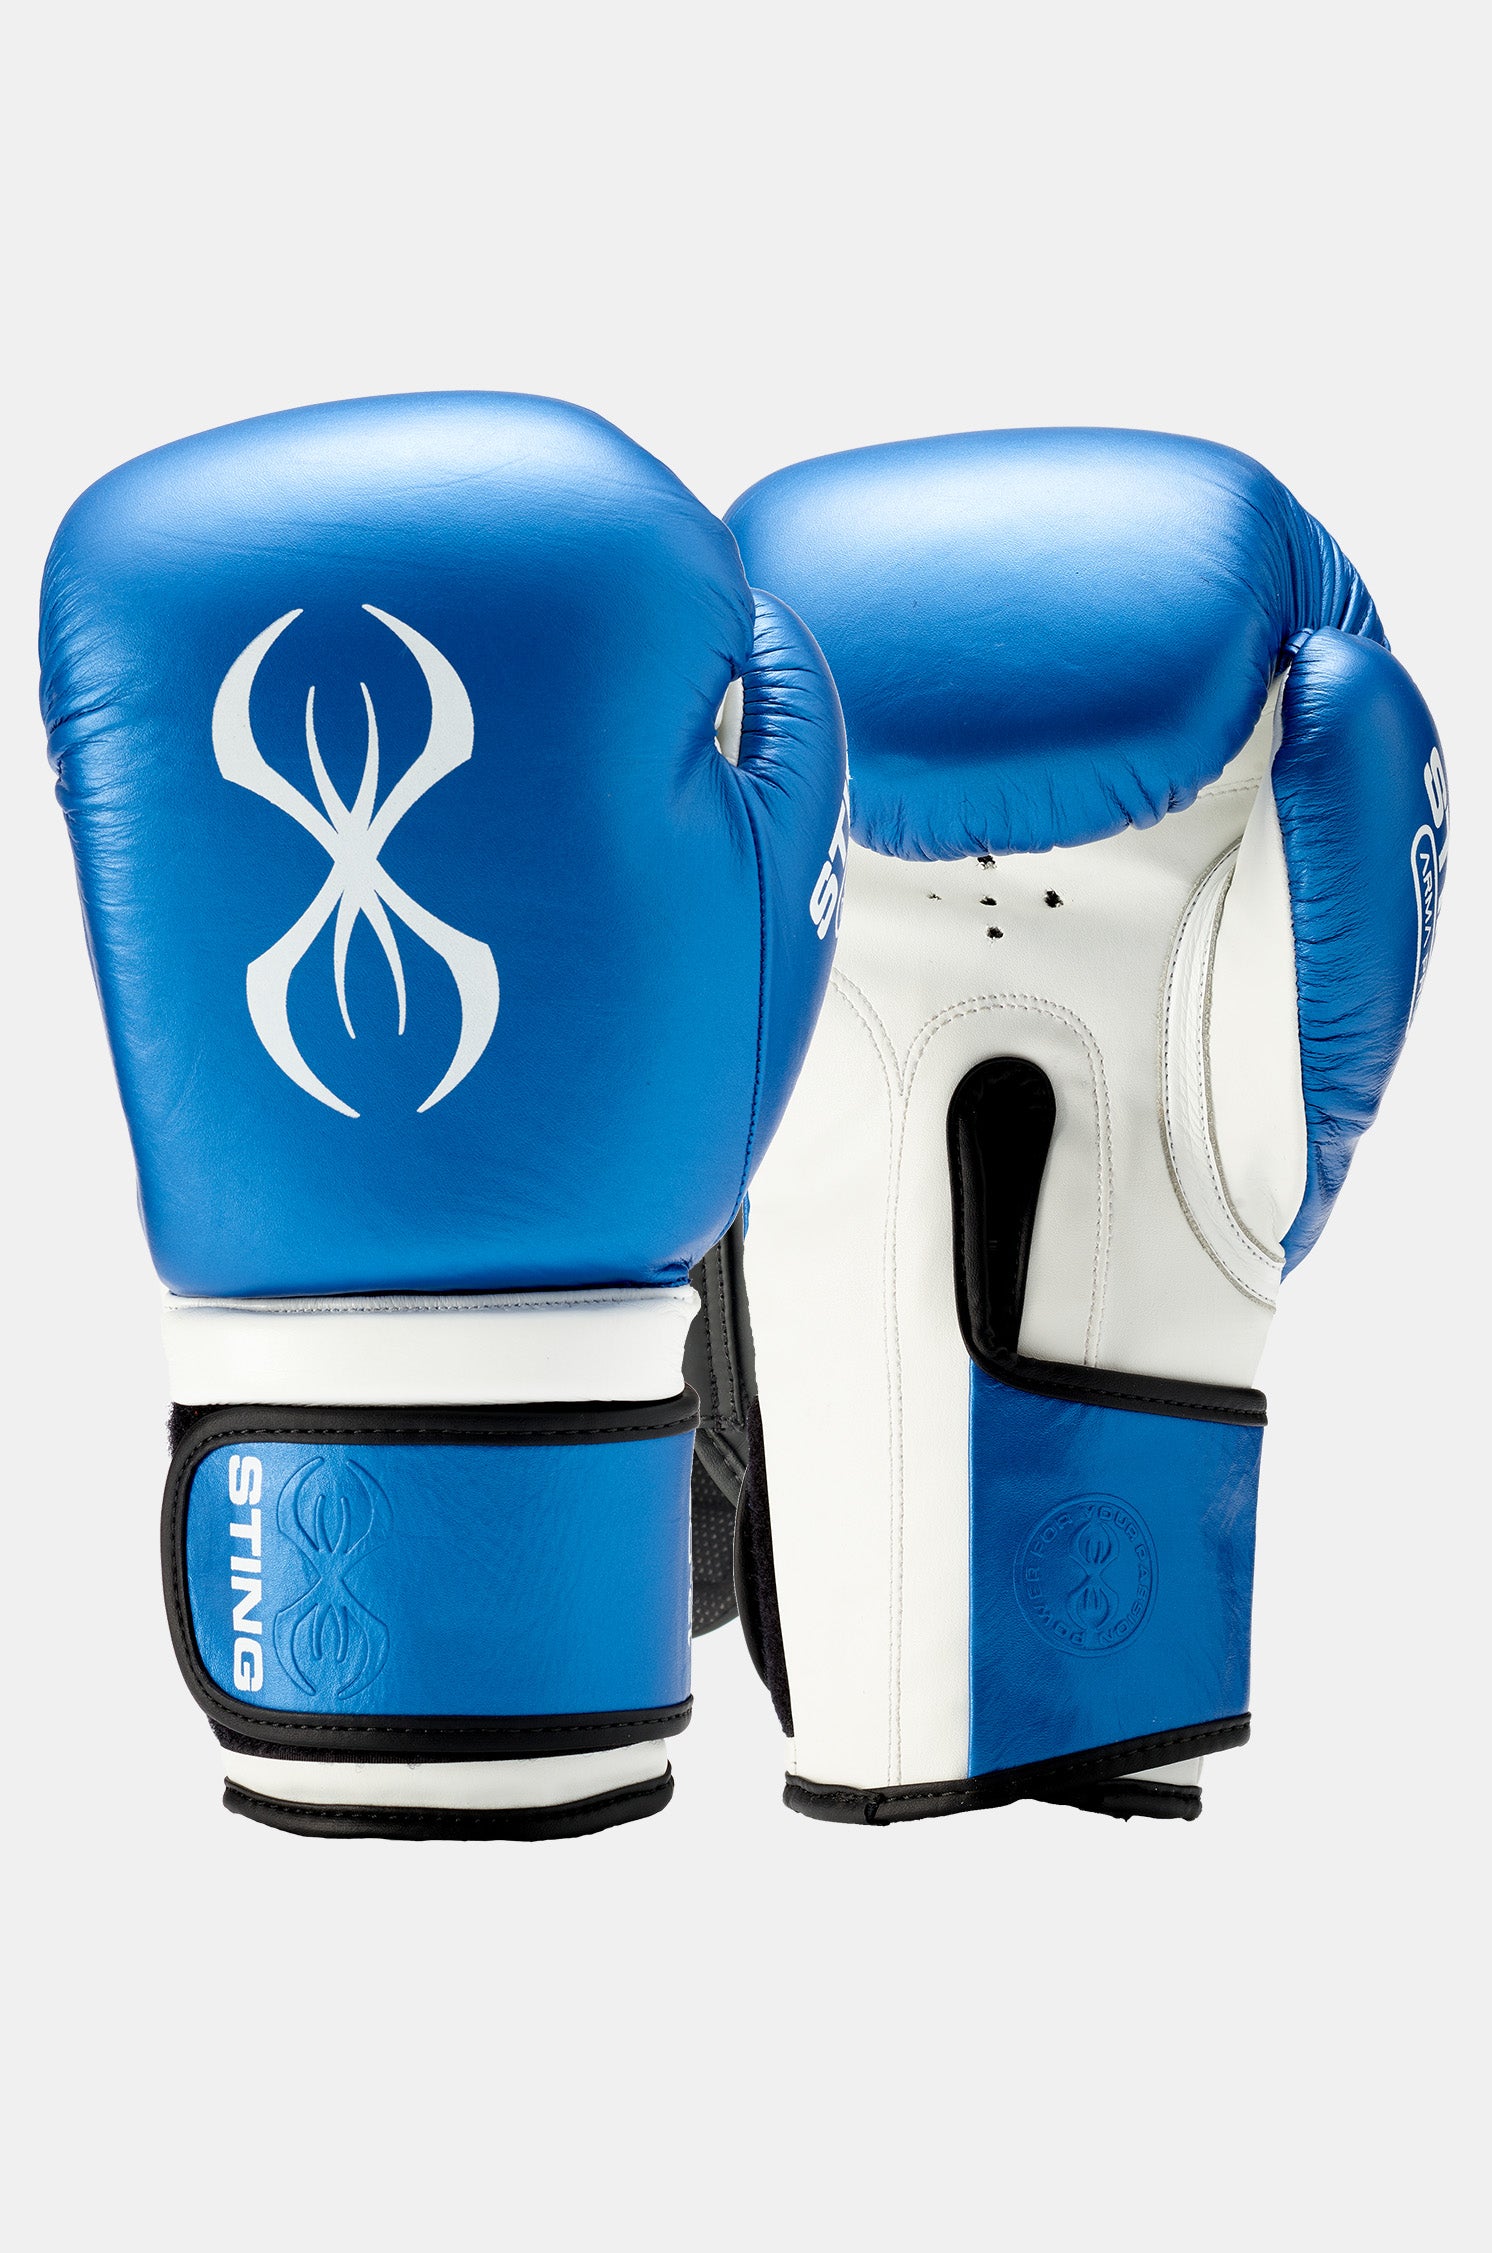 STING Armapro Boxing Gloves-White/Blue – STING Australiaᵀᴹ